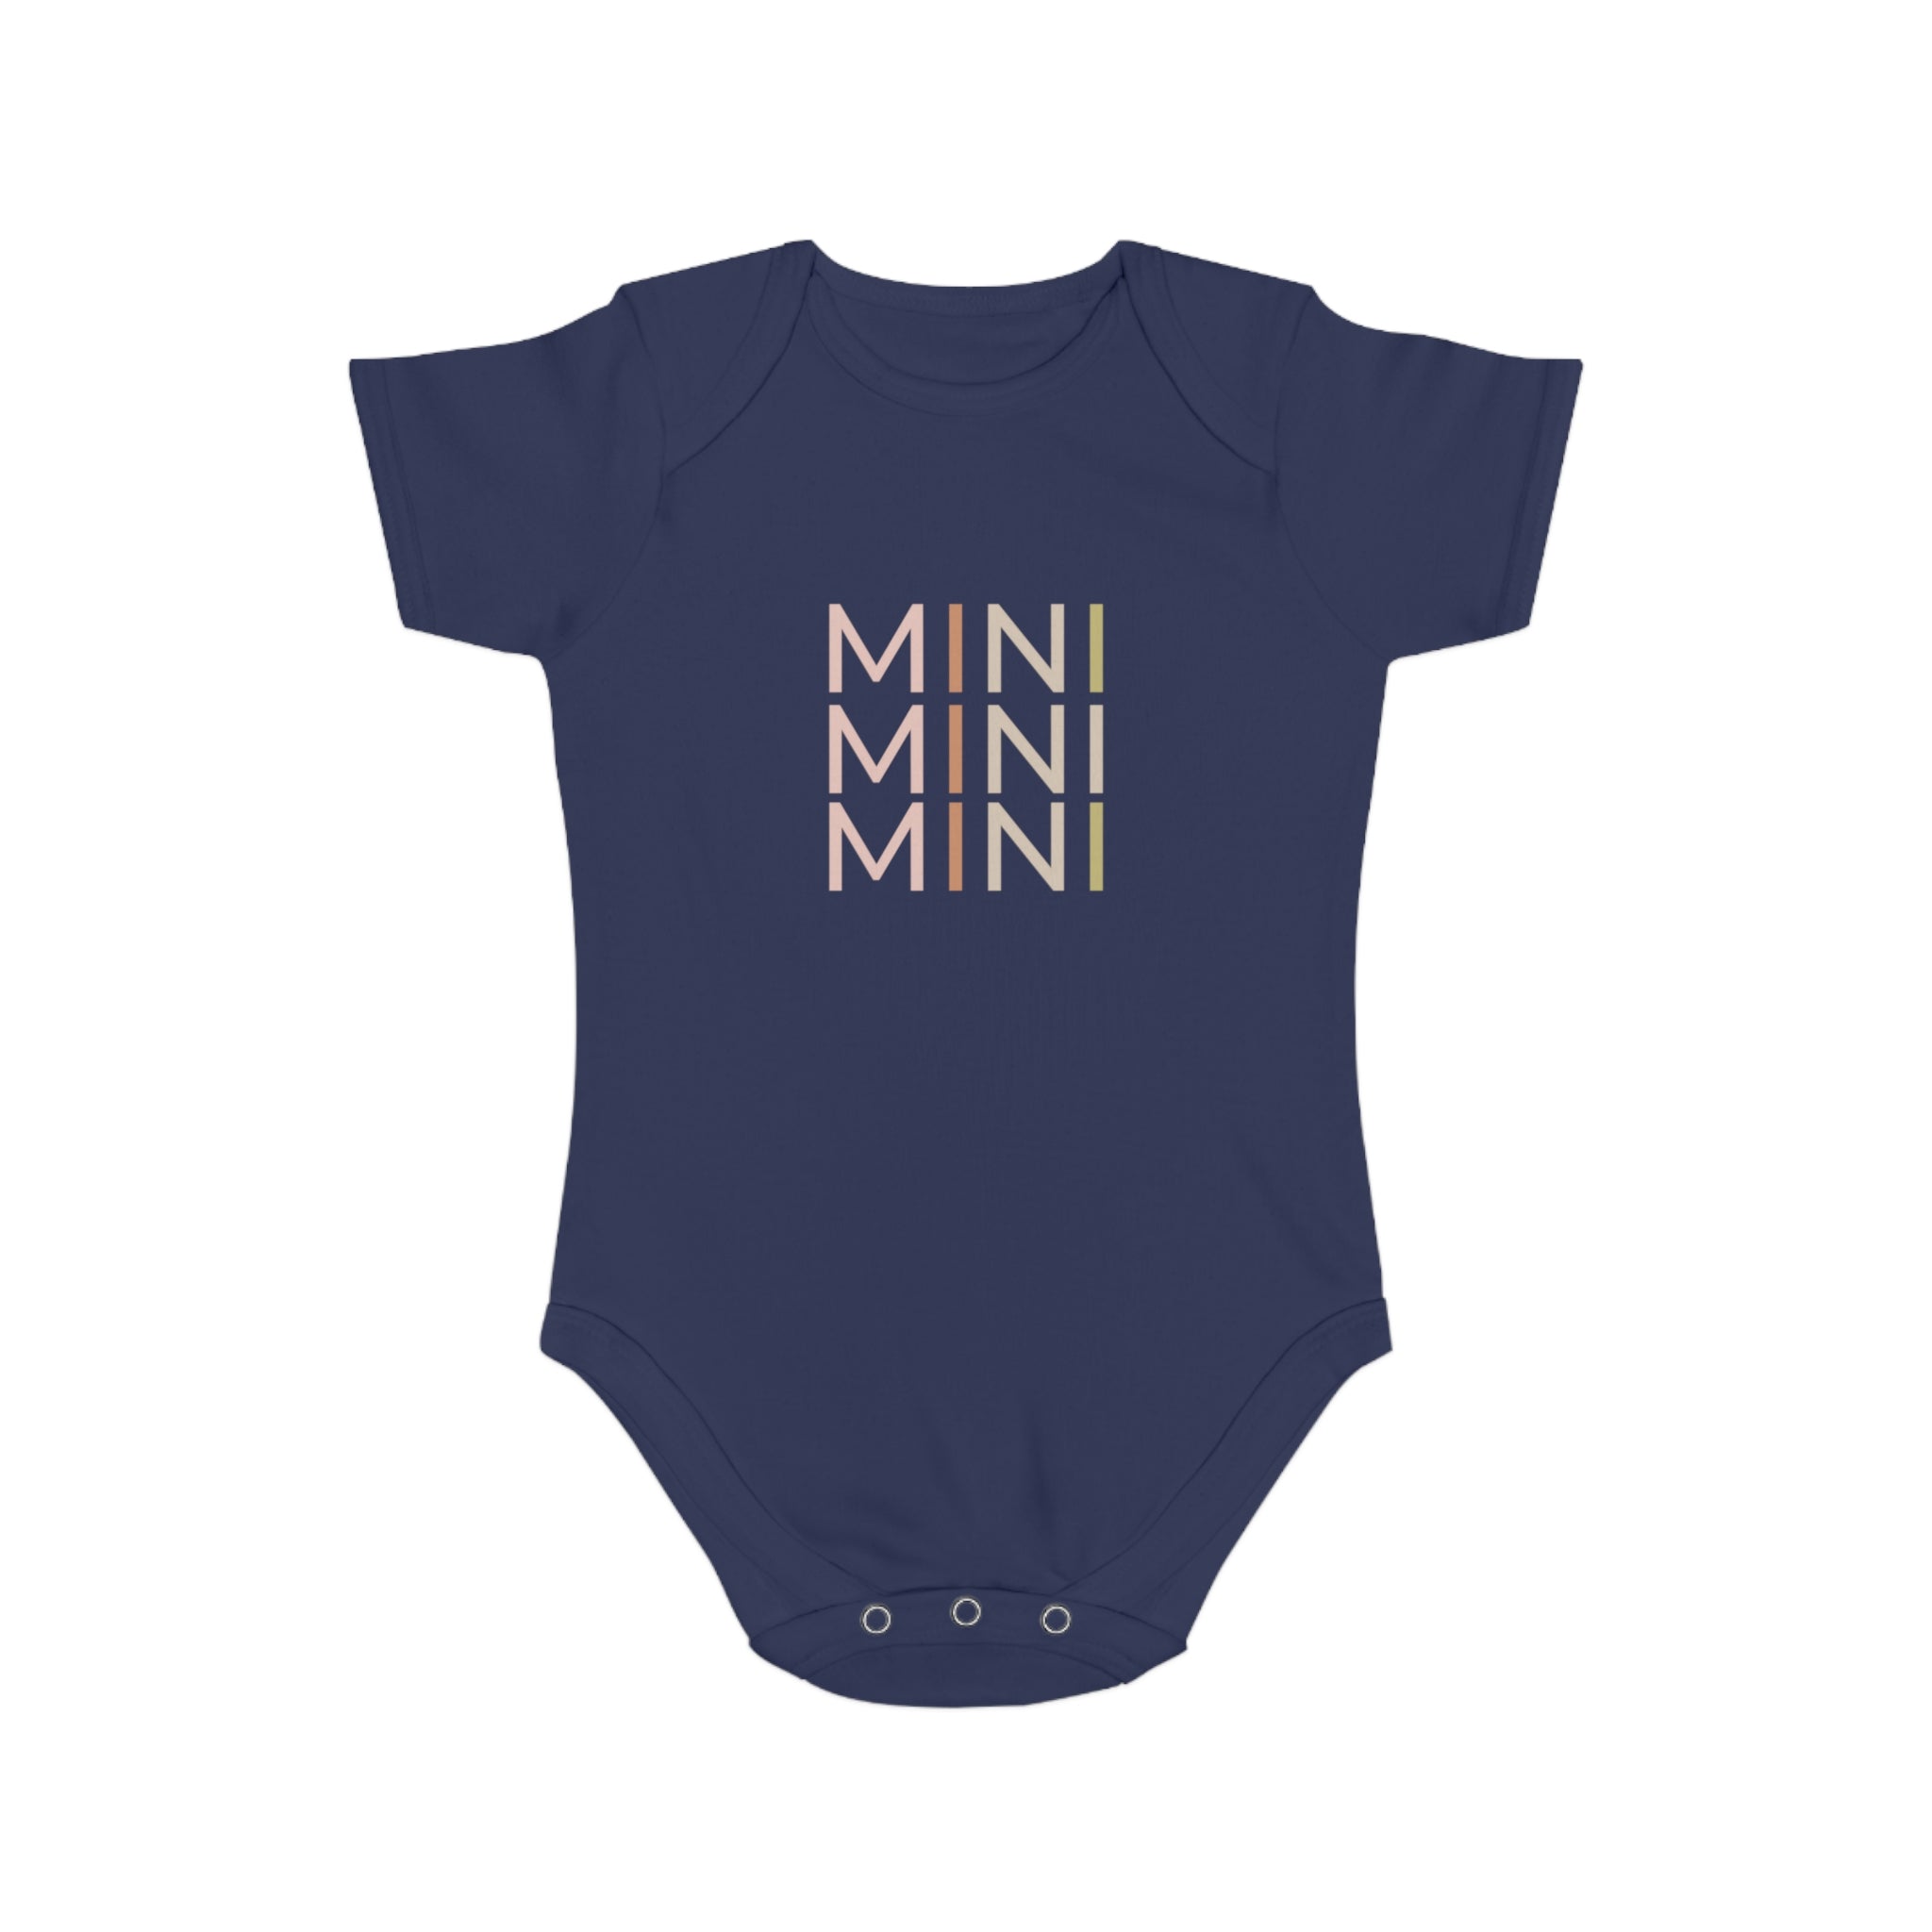 Blue mini mini mini onesie